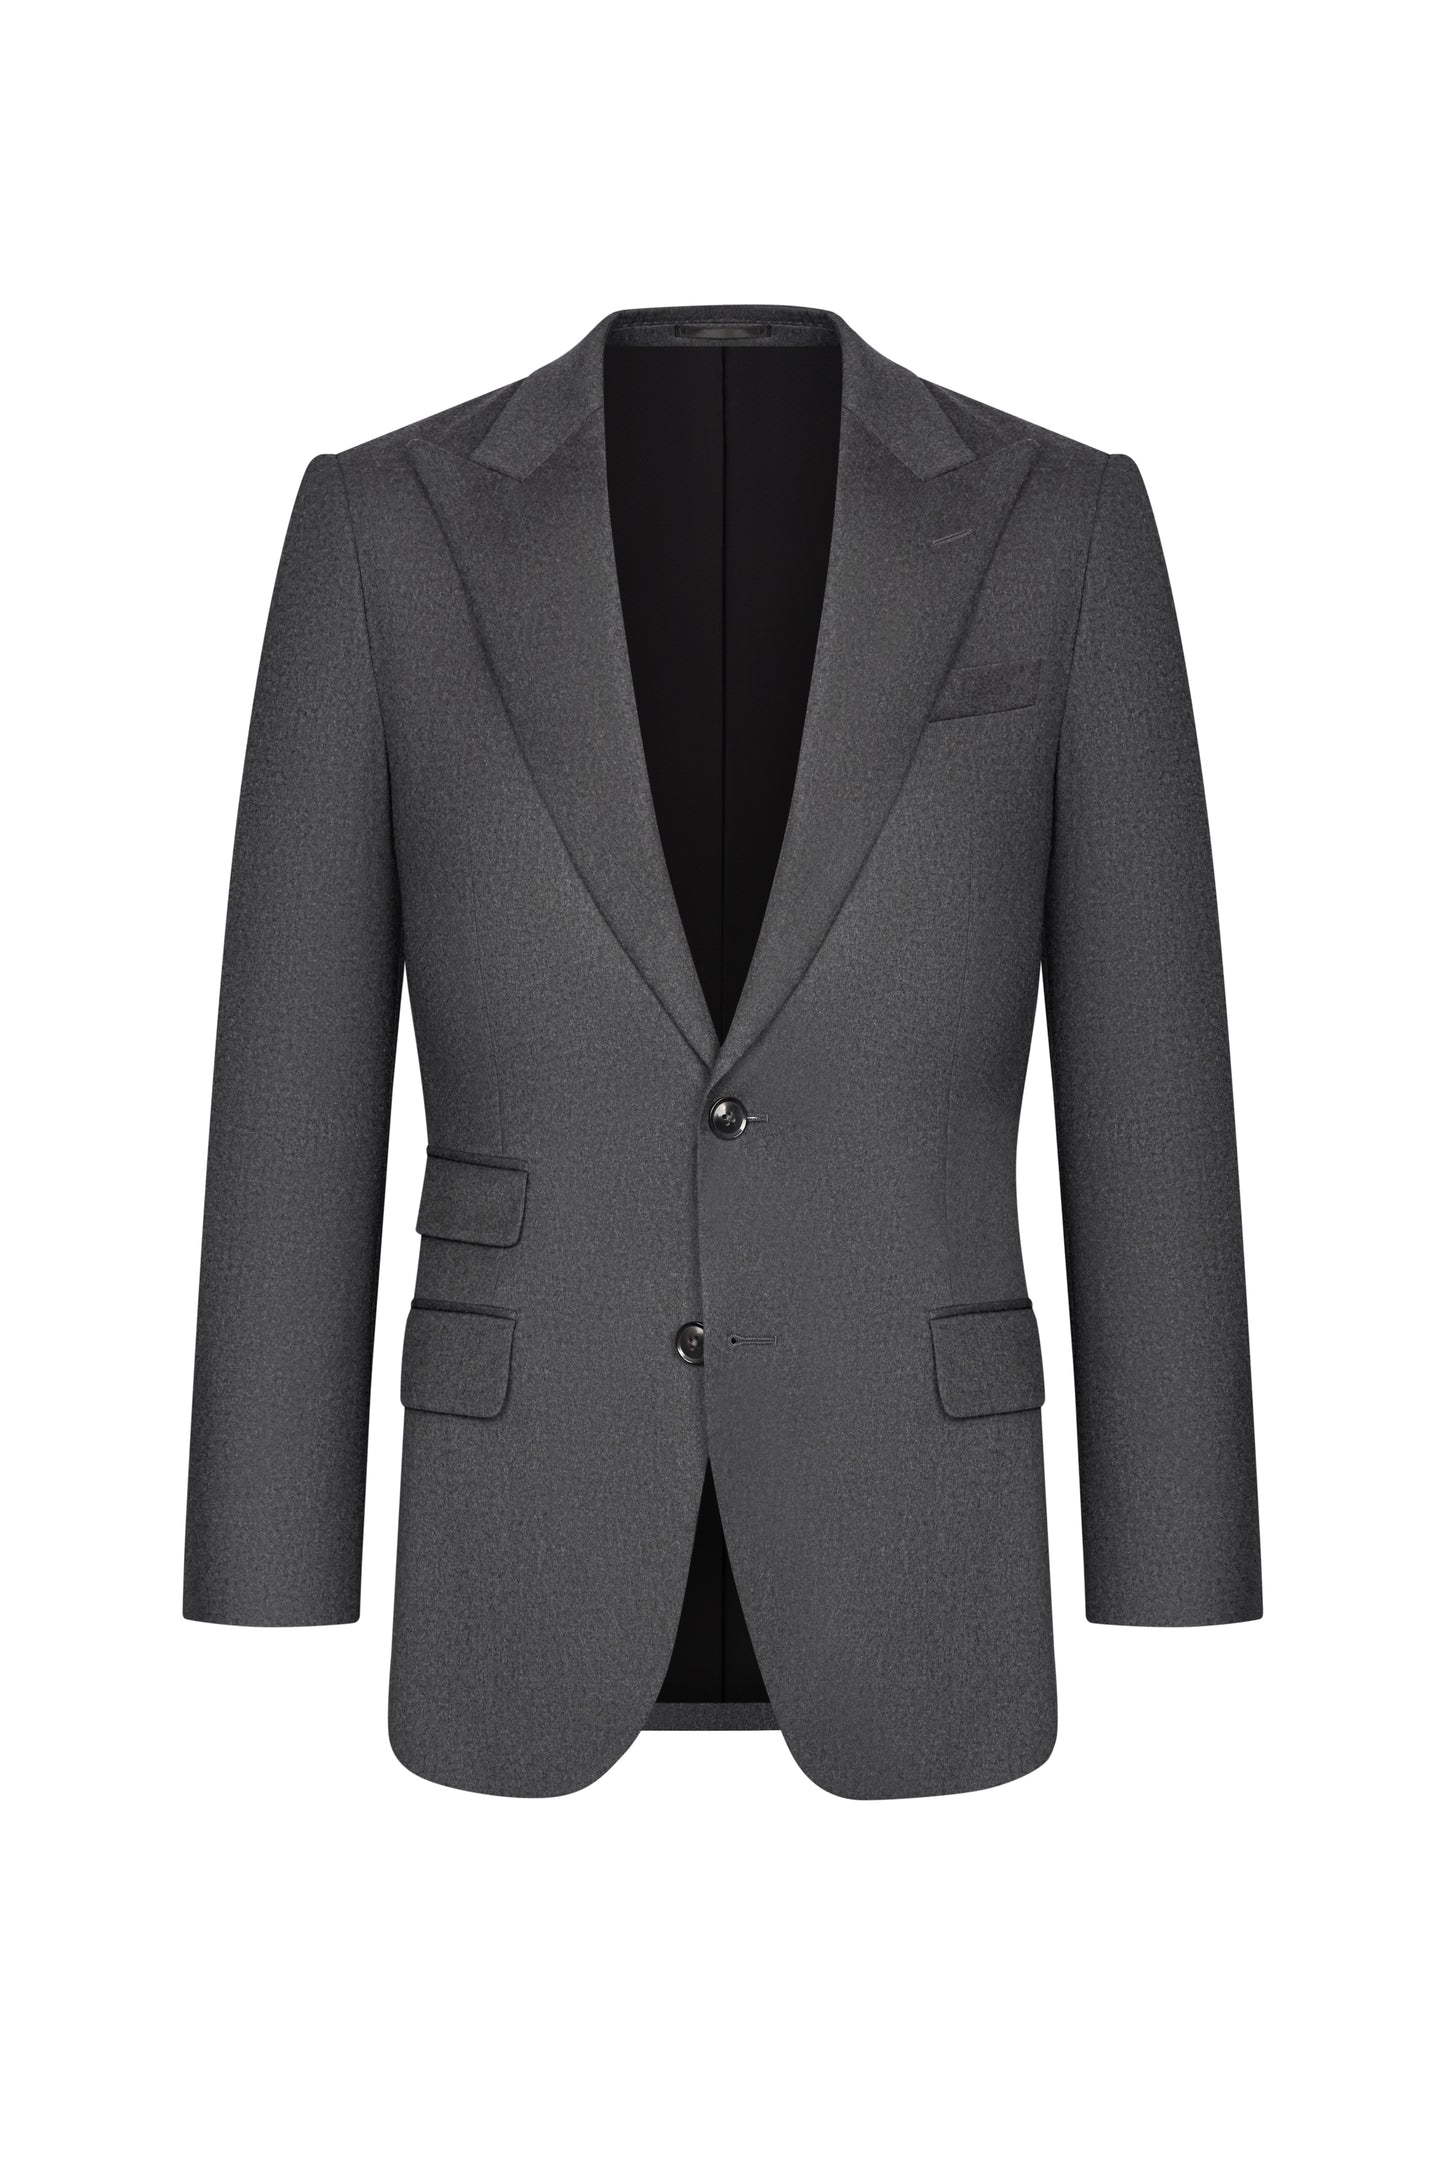 Charcoal Grey Flannel Custom Suit